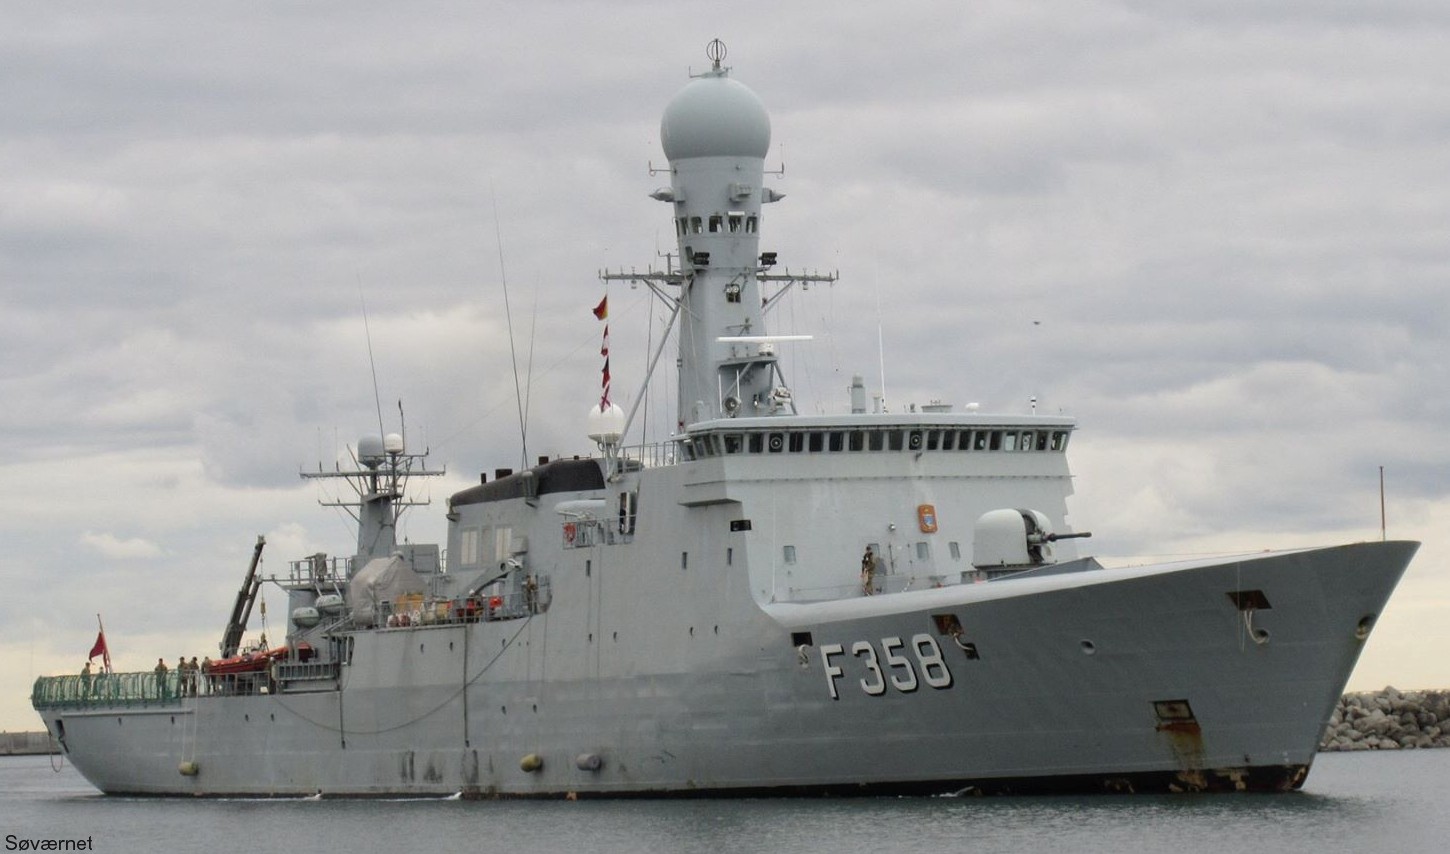 f-358 hdms triton thetis class ocean patrol frigate royal danish navy kongelige danske marine kdm inspektionsskibet svendborg shipyard 32x